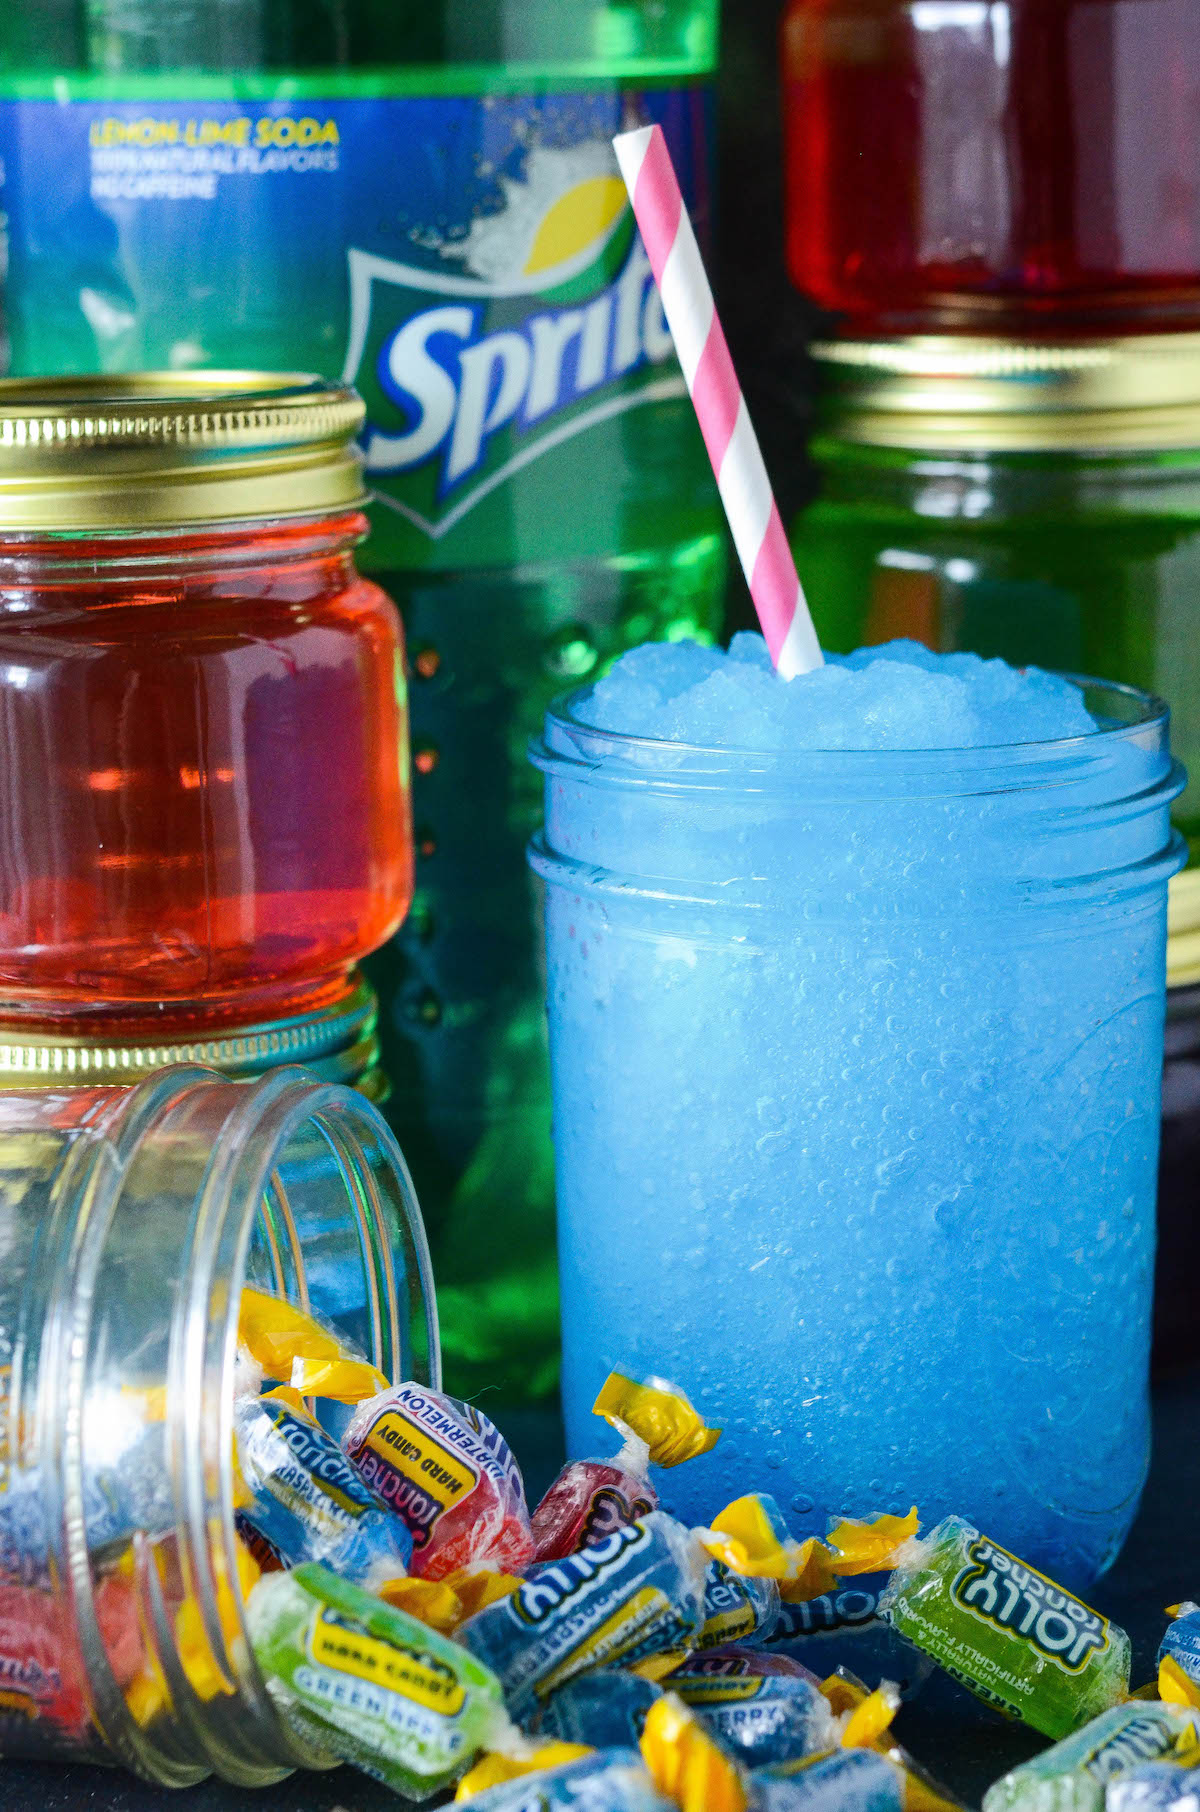 Jars of infused vodka with a blue vodka Slushies drink in a mason jar.